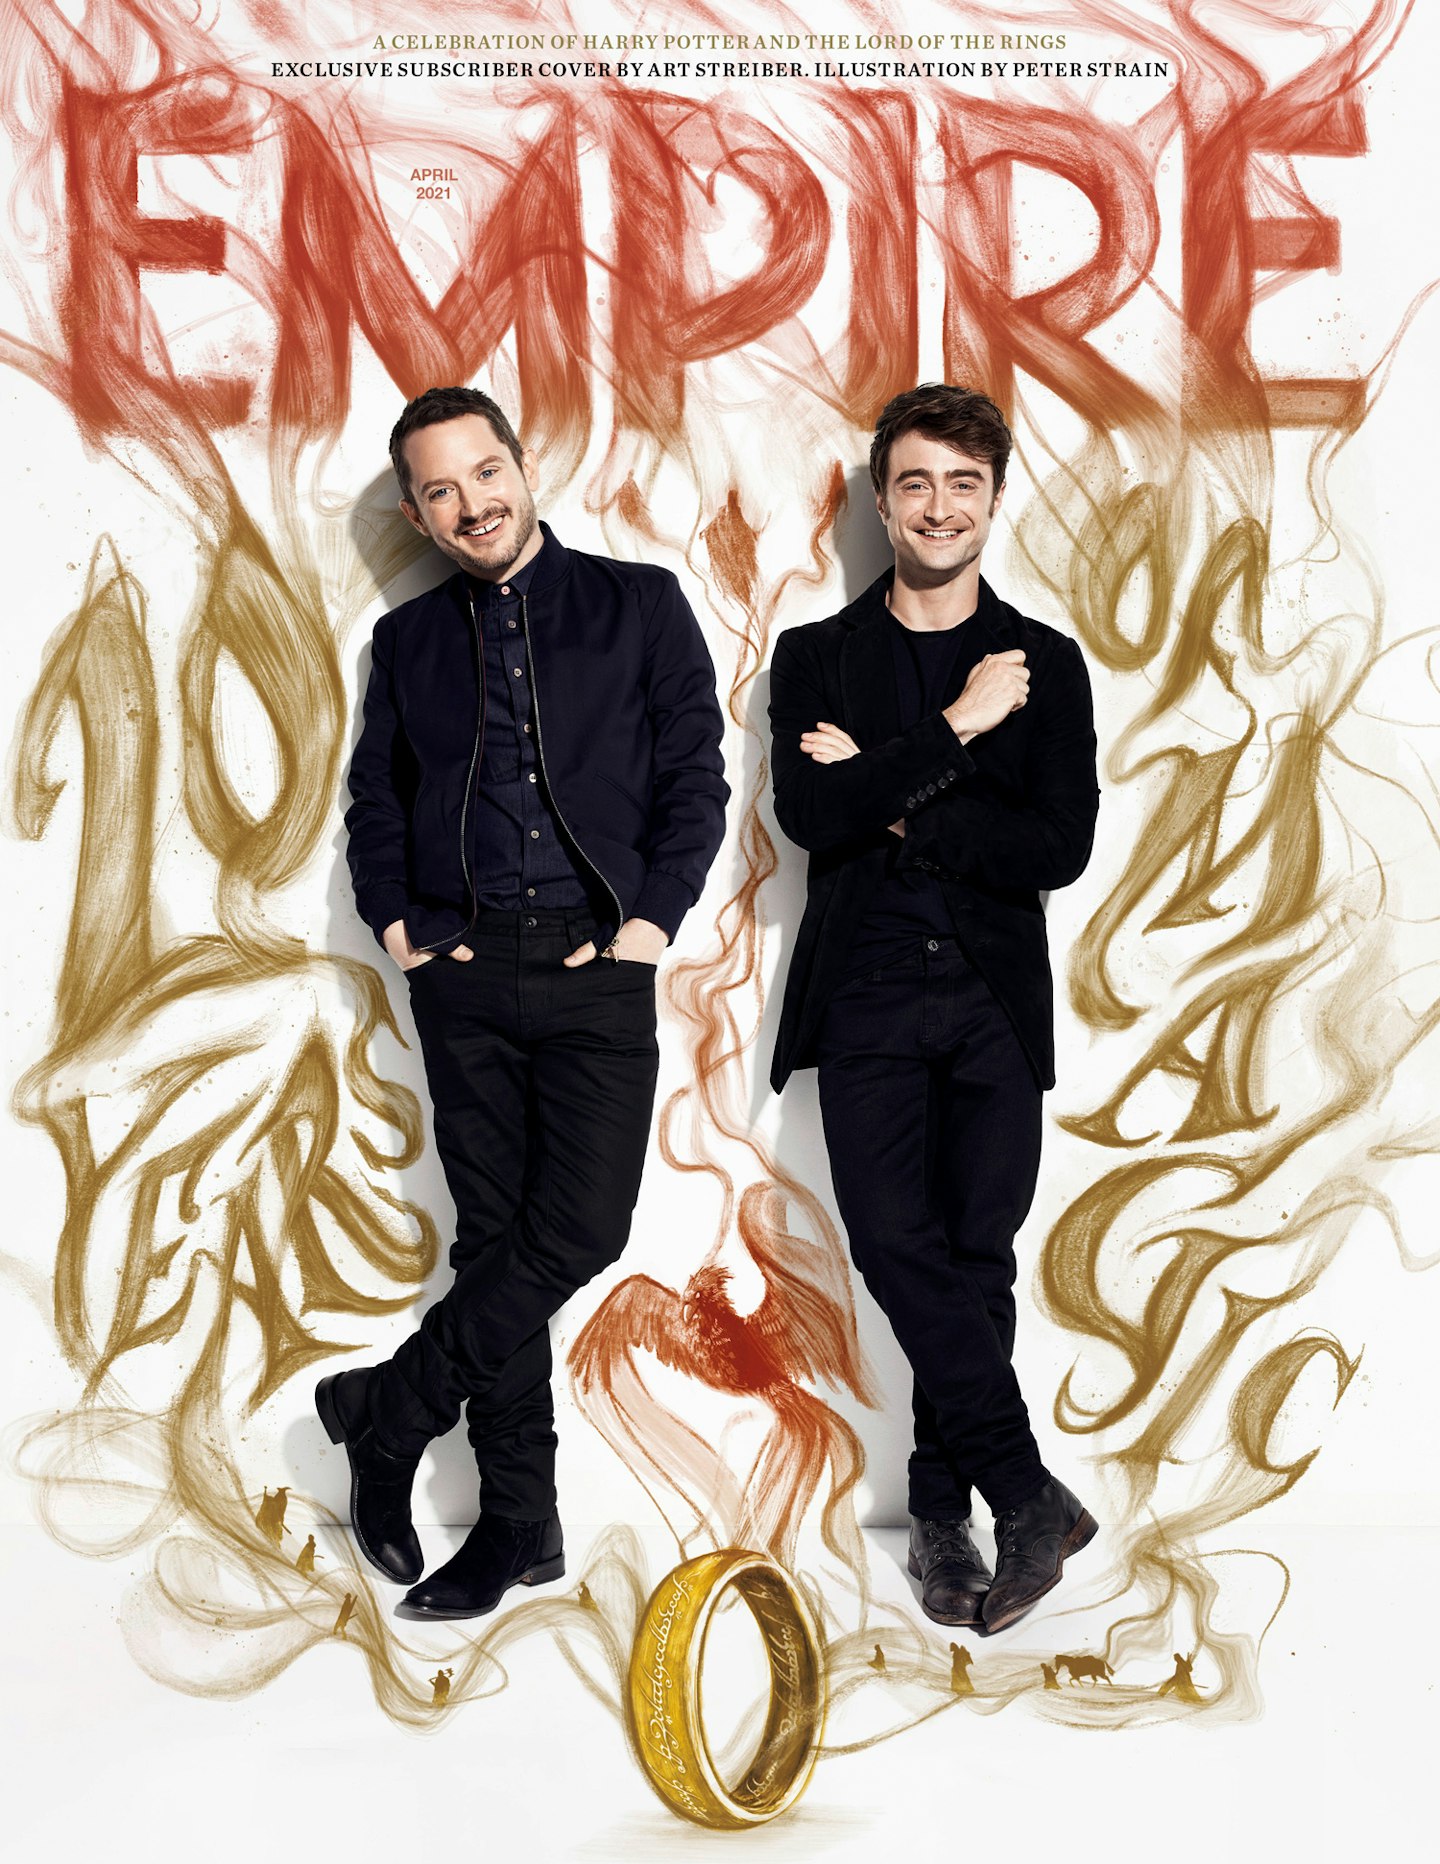 Empire – April 2021 subscriber cover